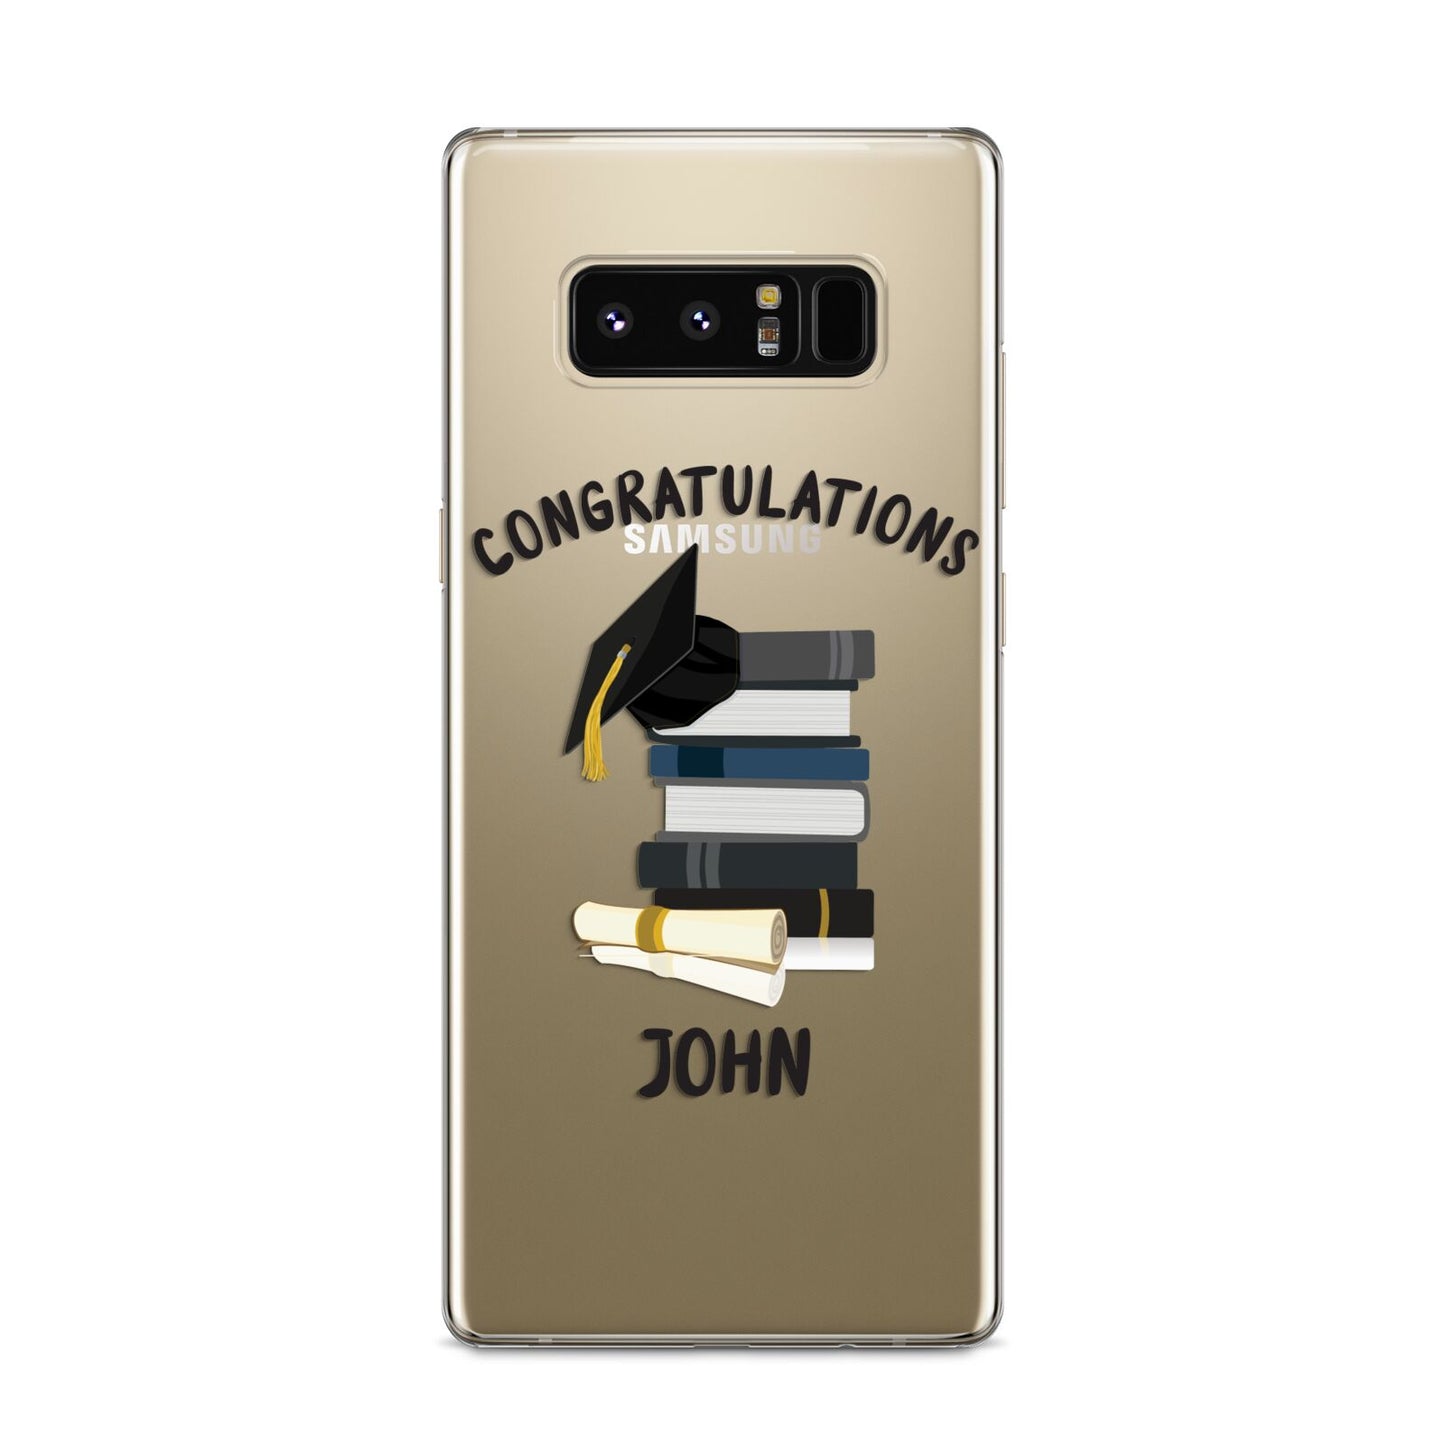 Congratulations Graduate Samsung Galaxy S8 Case